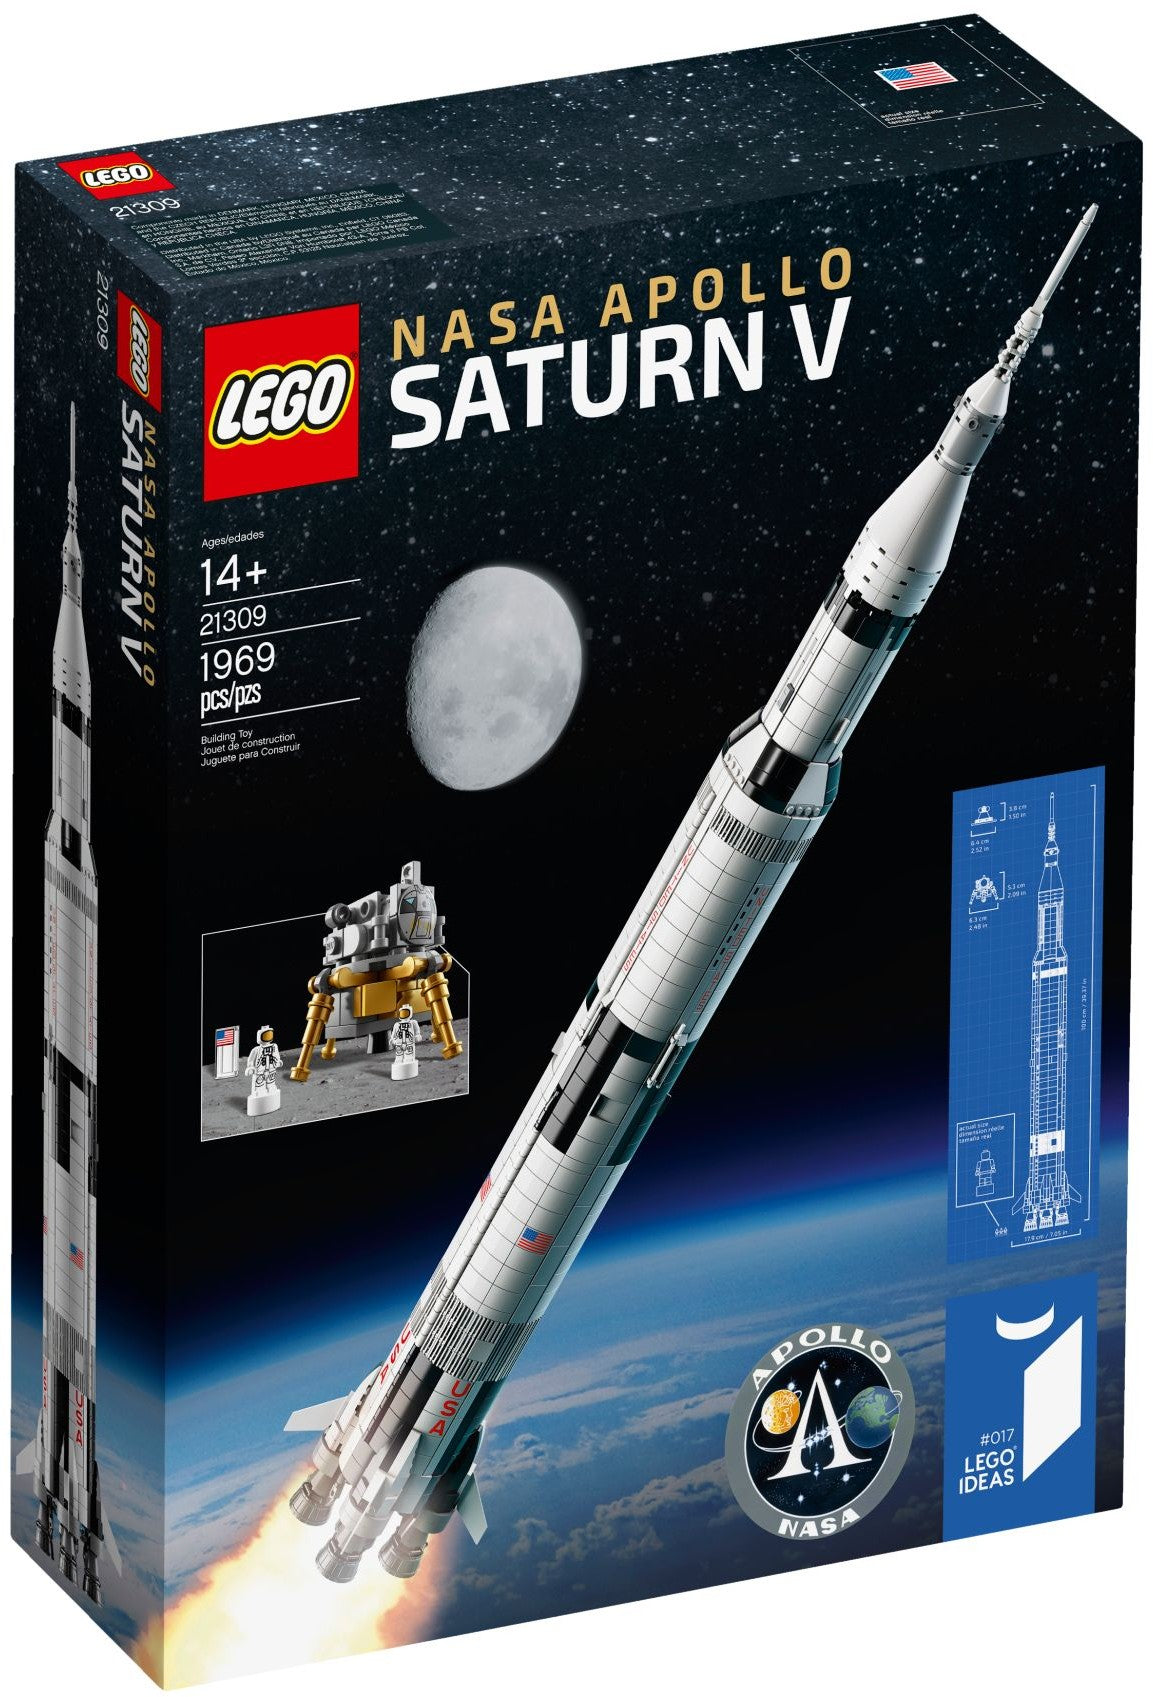 Lego Ideas 21309 - NASA Apollo Saturn V